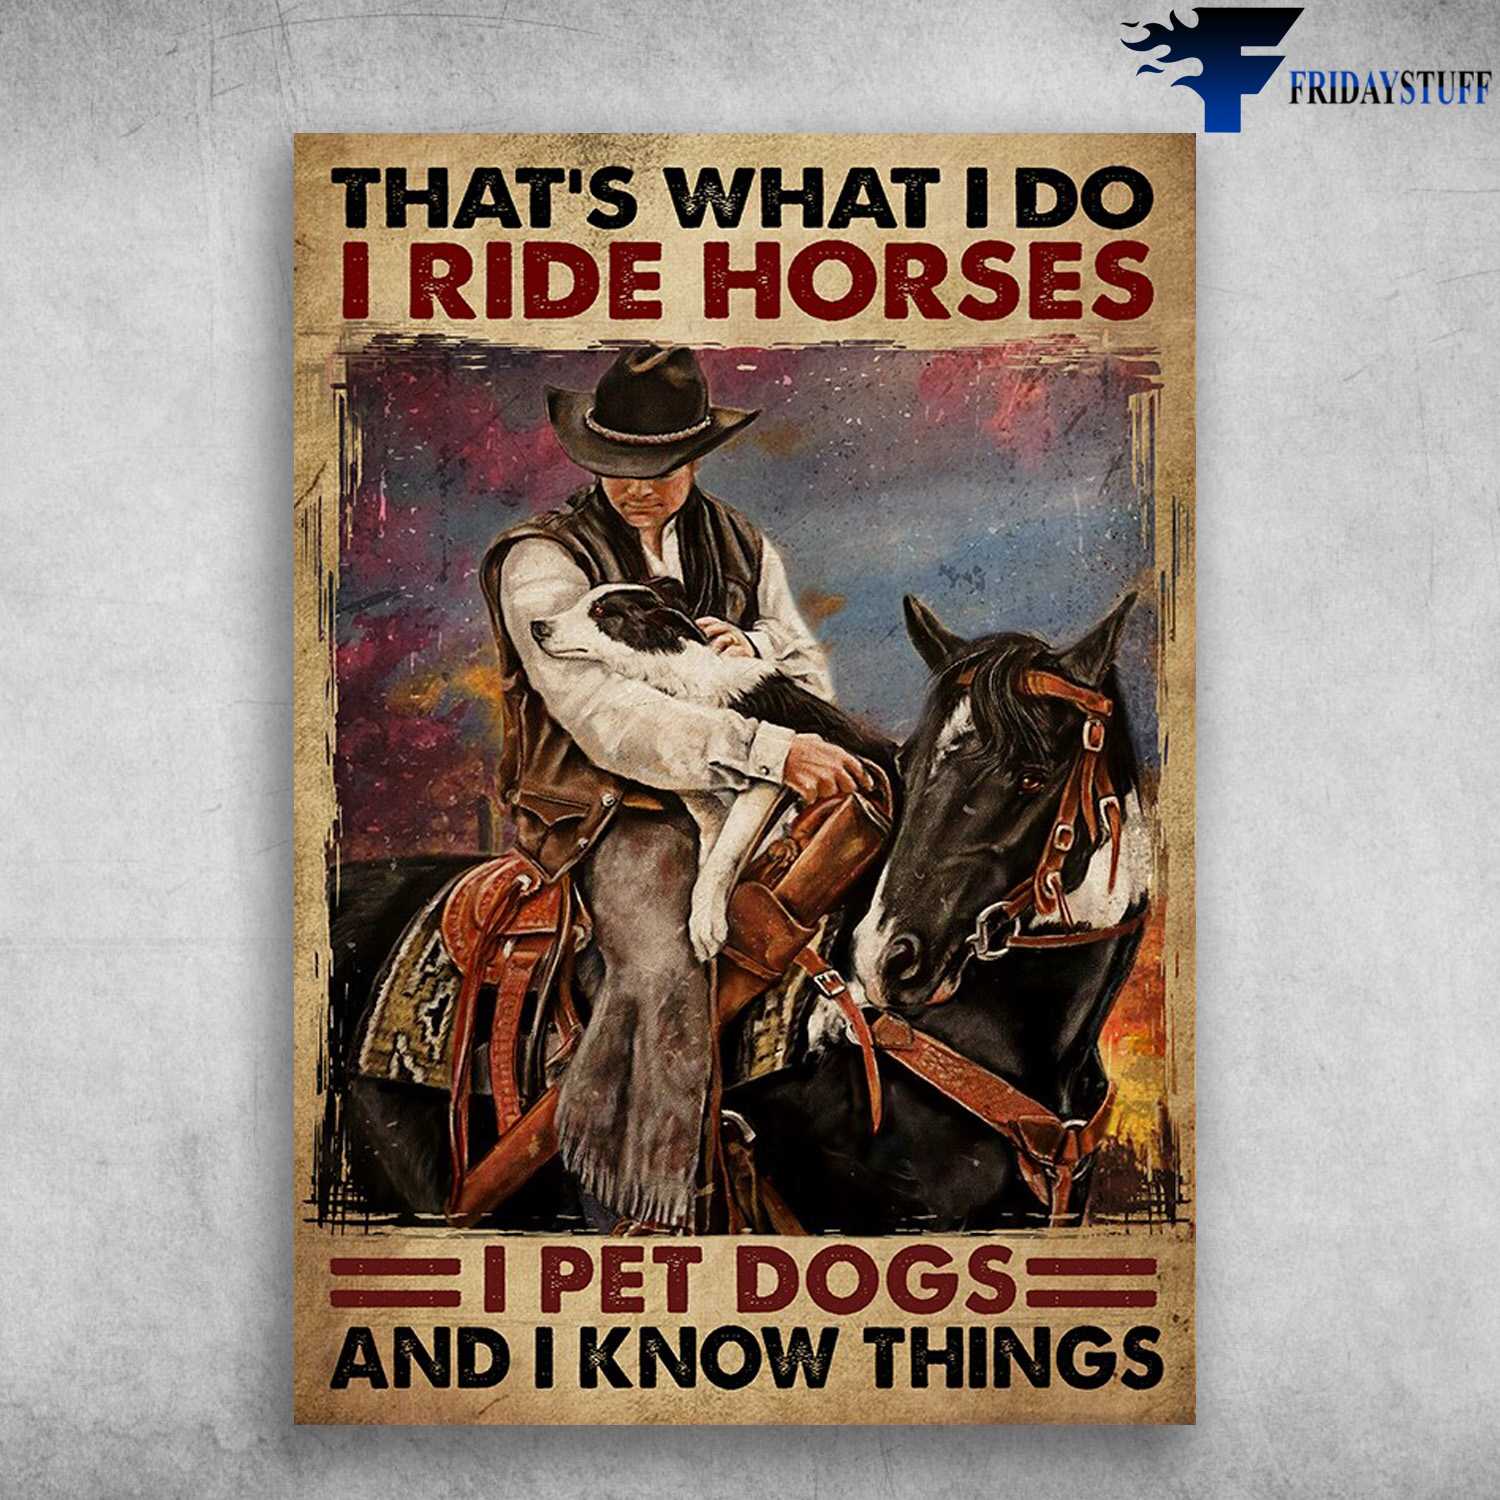 Cowboy Horse, Sleeping Dog - I Ride Horses, I Pet Dogs, And I Know Things